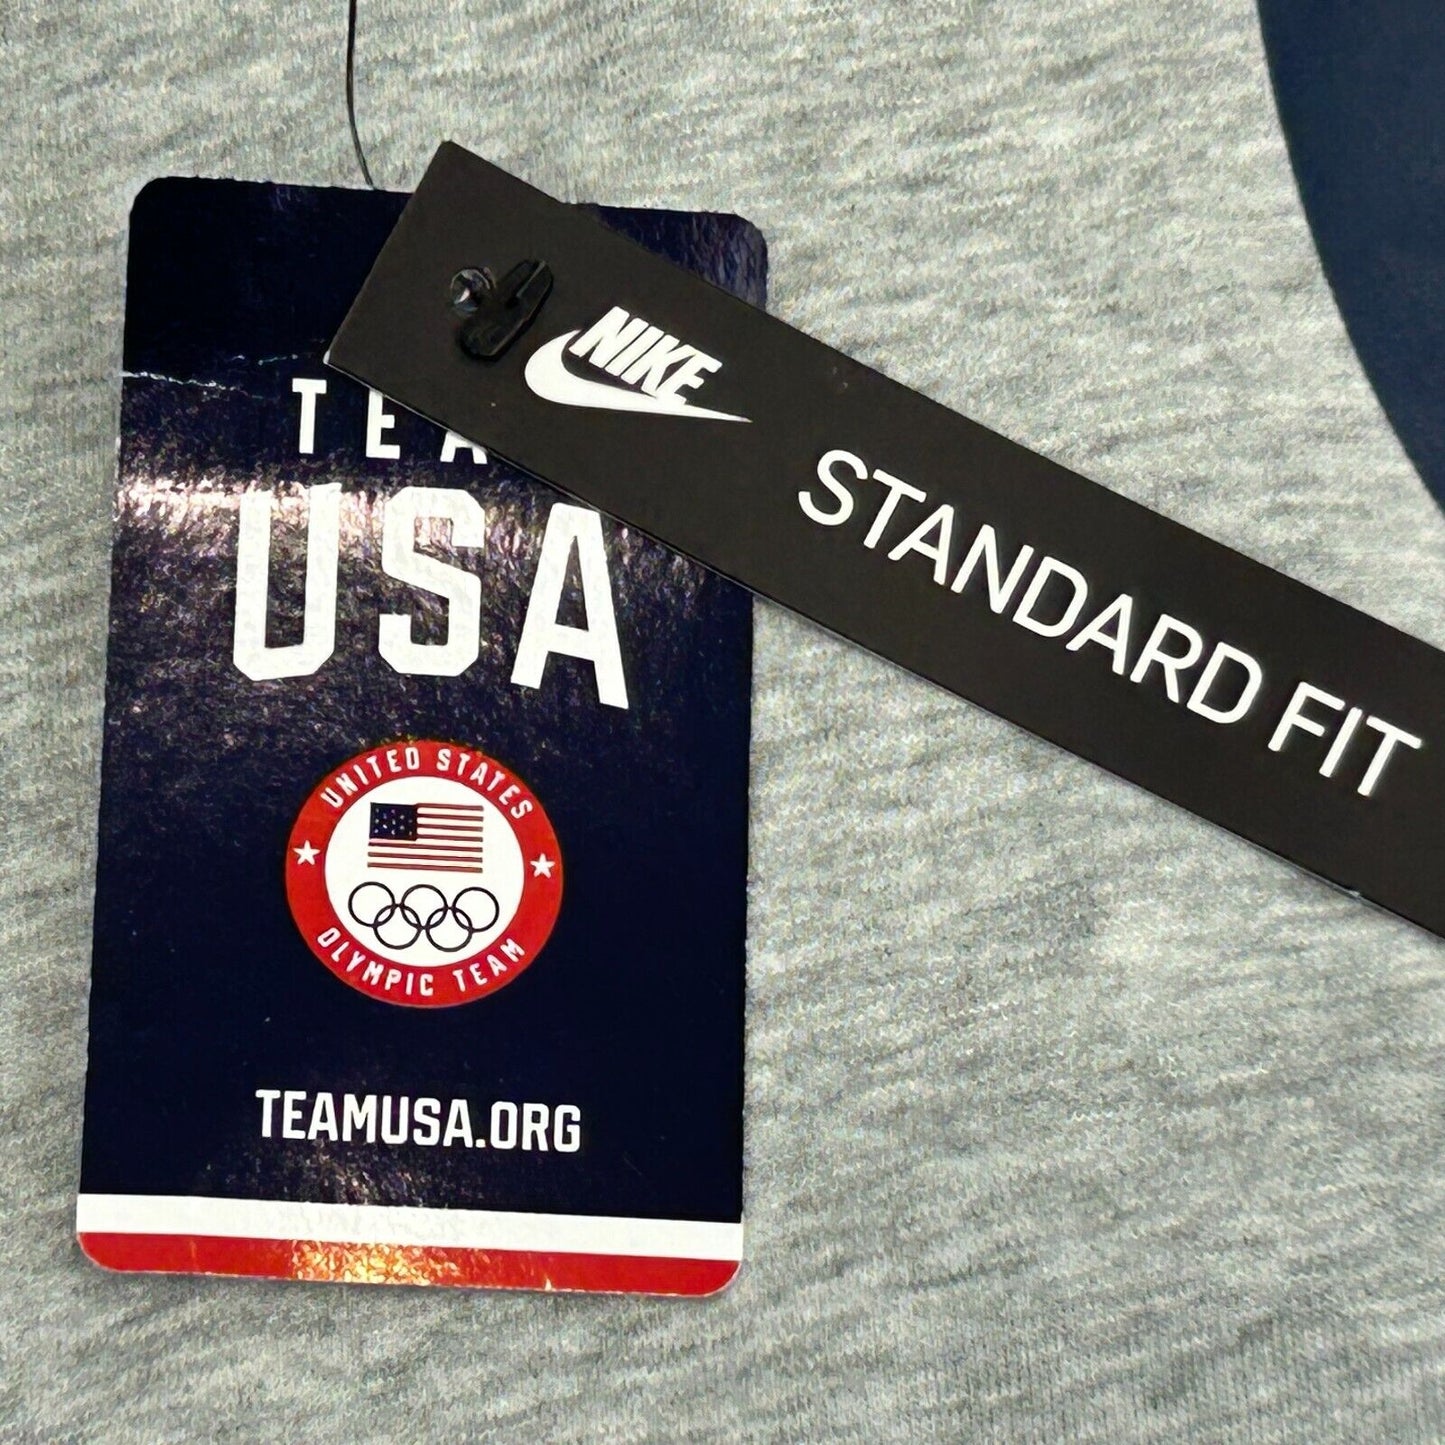 United States Olympic Team T Shirt Medium Team USA Patriotic Nike Tee Mens Gray